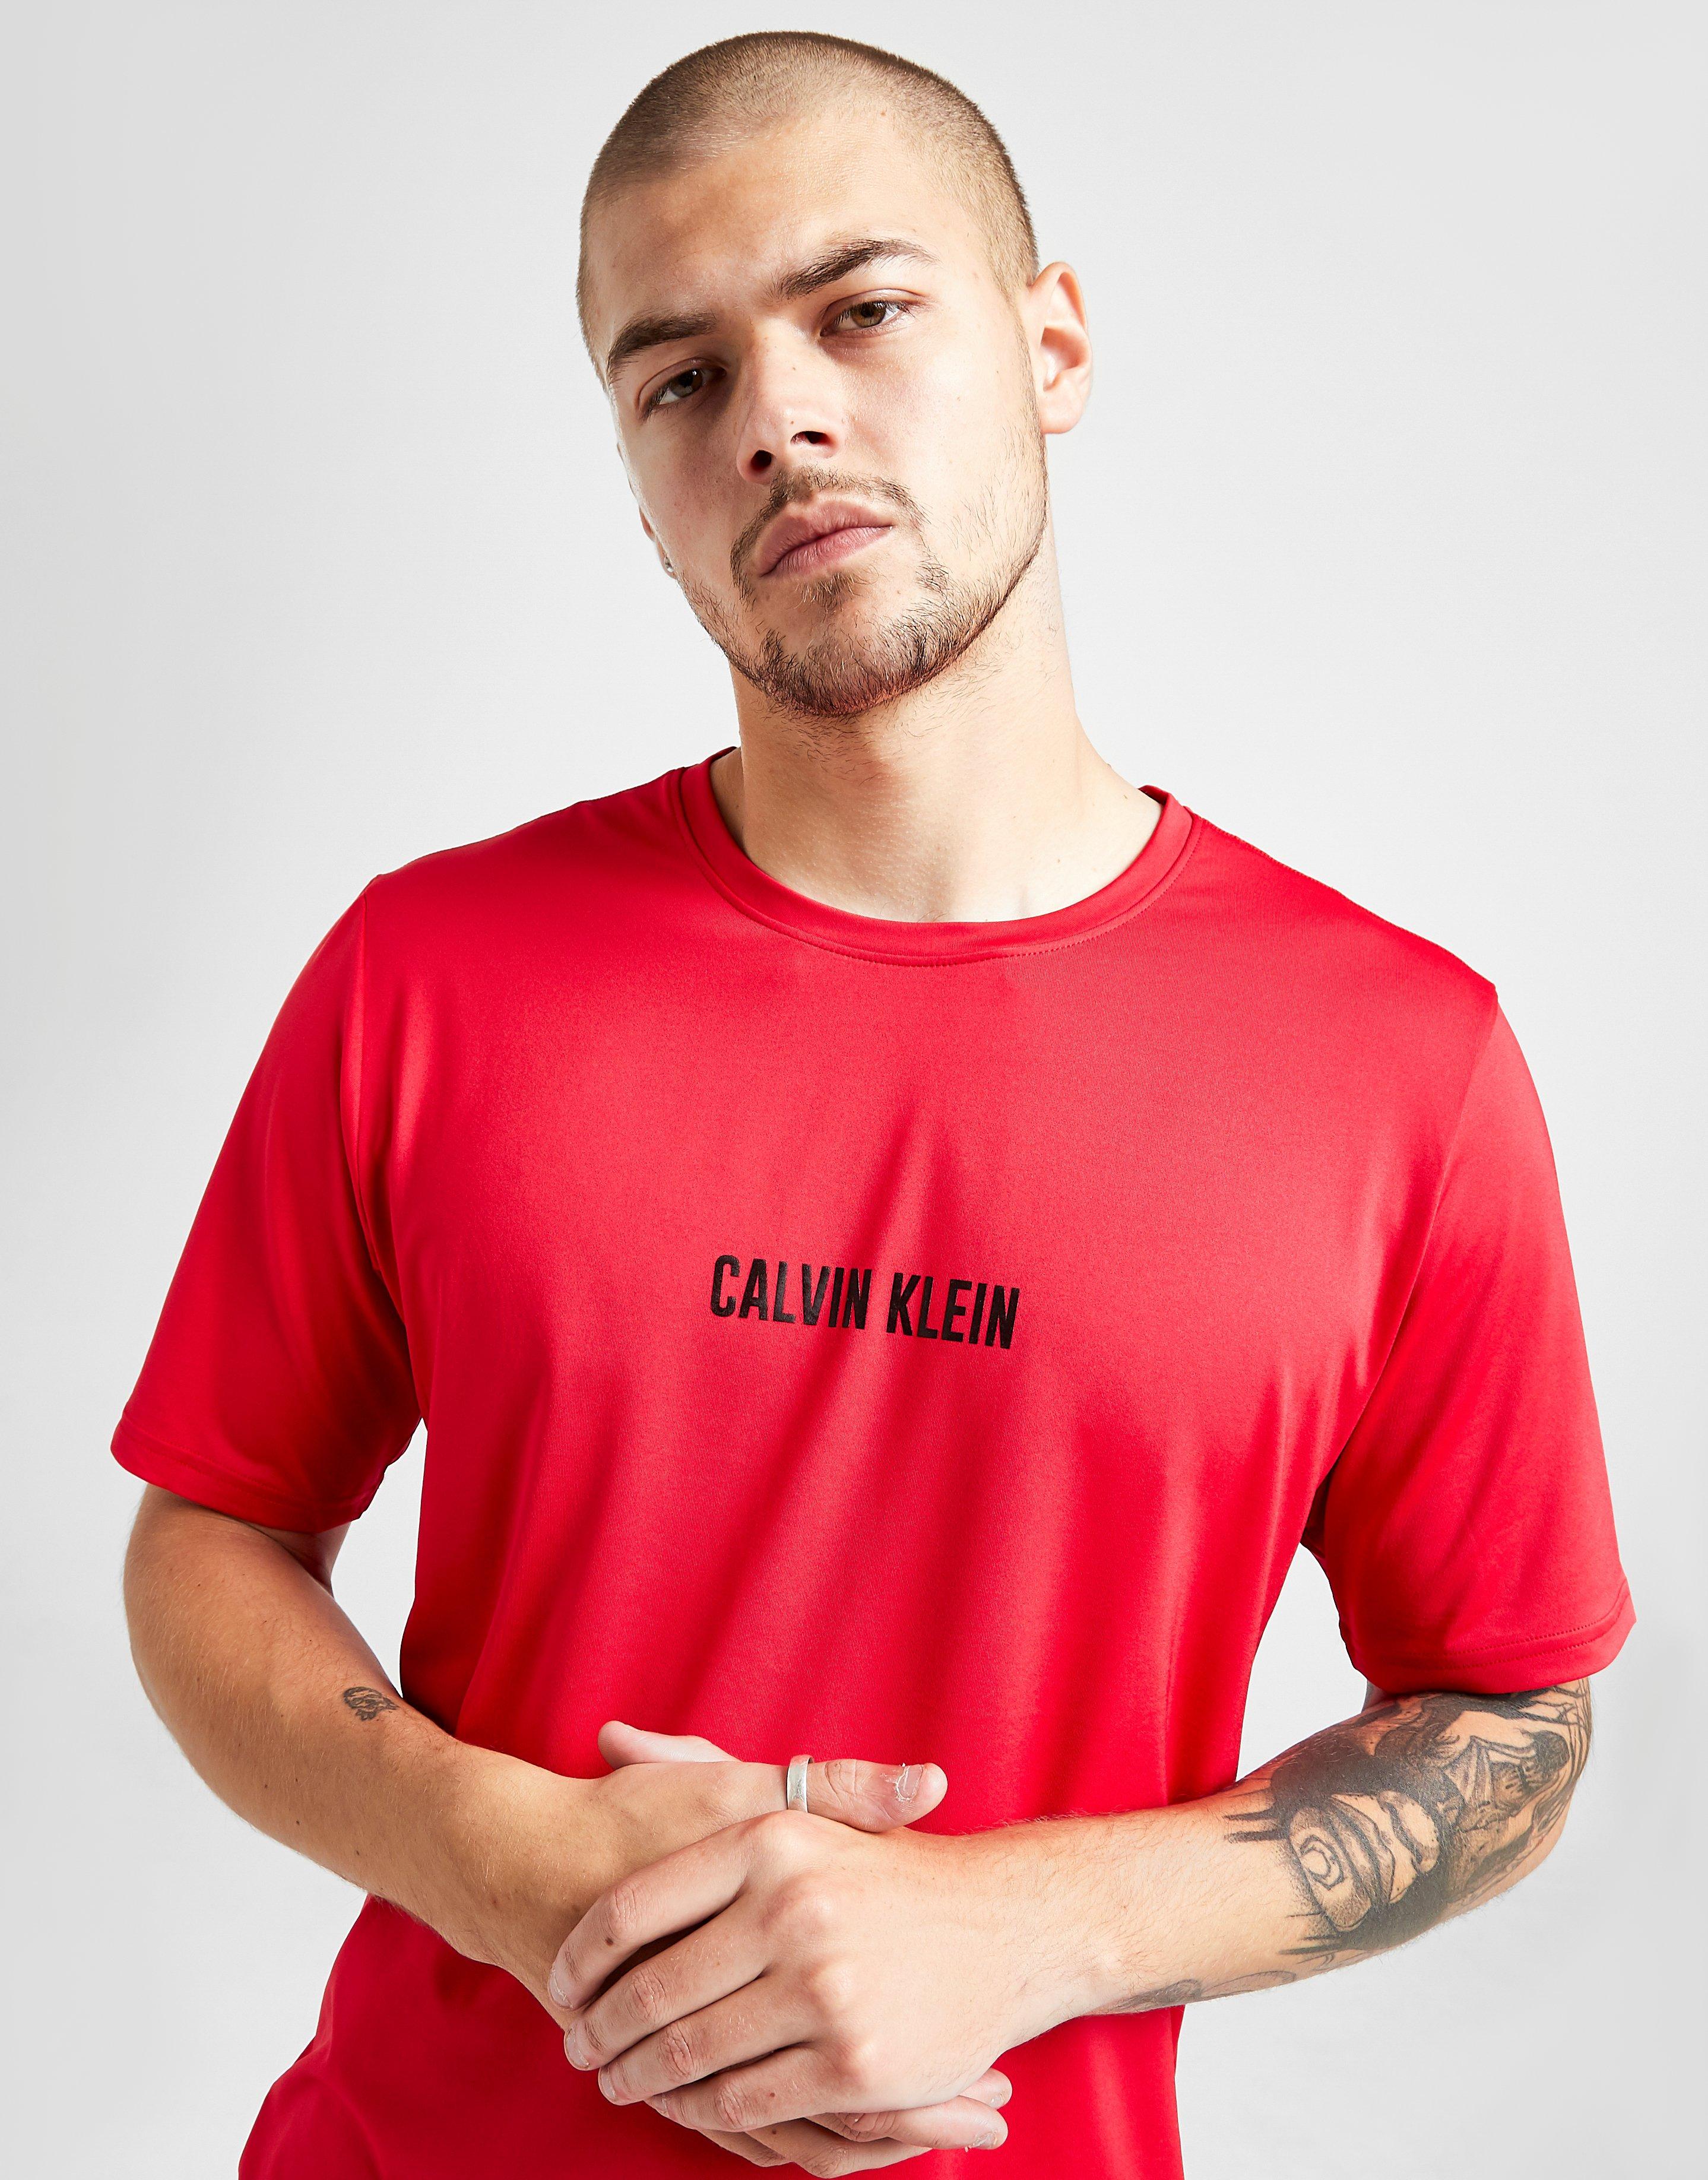 calvin klein t shirt red